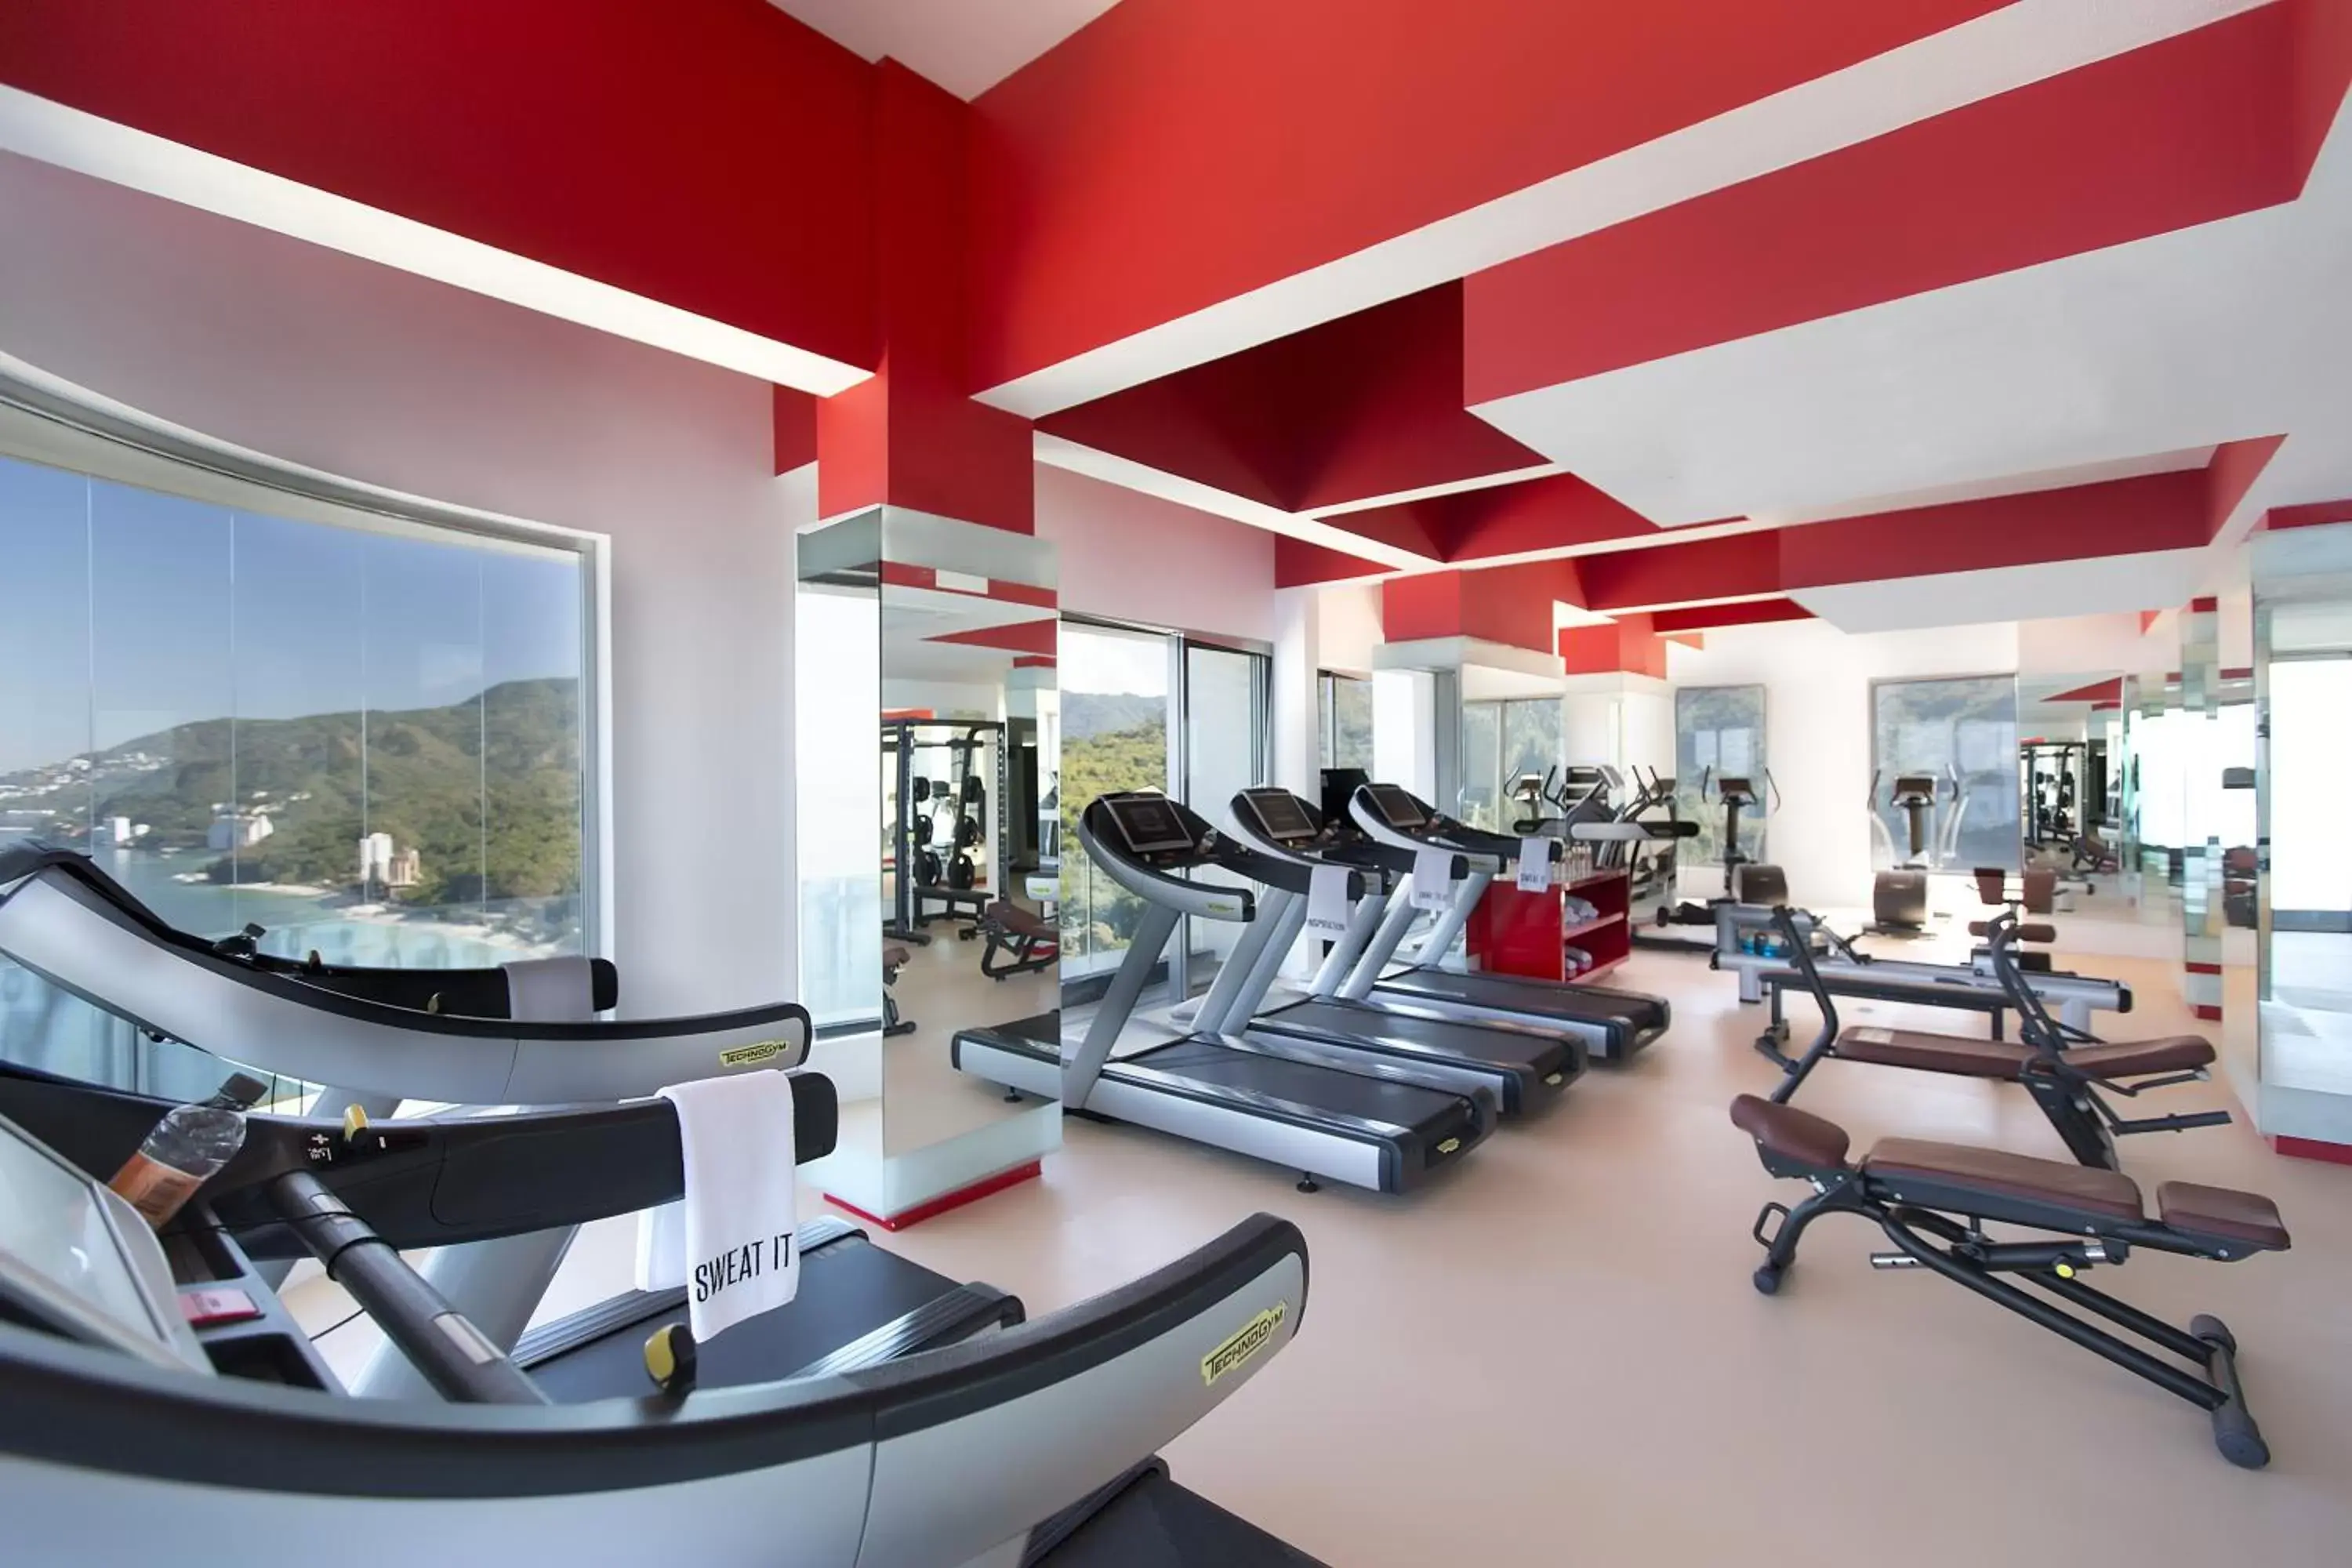 Fitness centre/facilities, Fitness Center/Facilities in Garza Blanca Preserve Resort & Spa